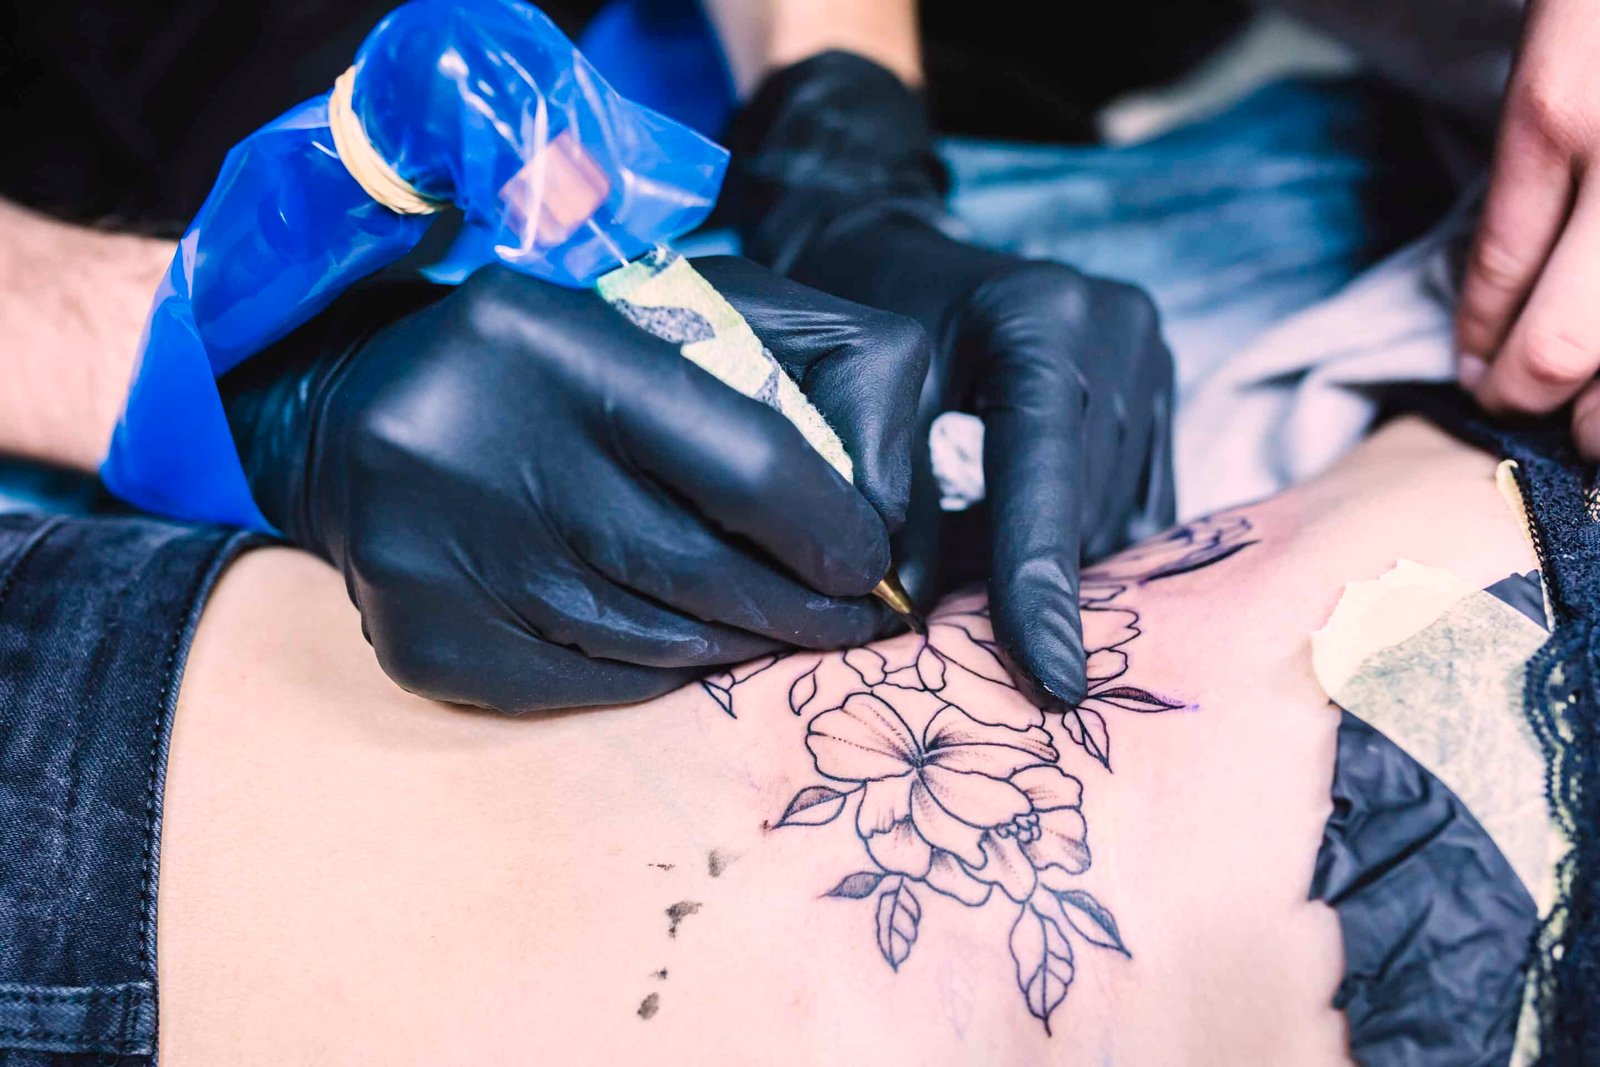 Neil Patrick Harris Flexes His Whimsical Arm Tattoo: 'I Got Some New Ink'